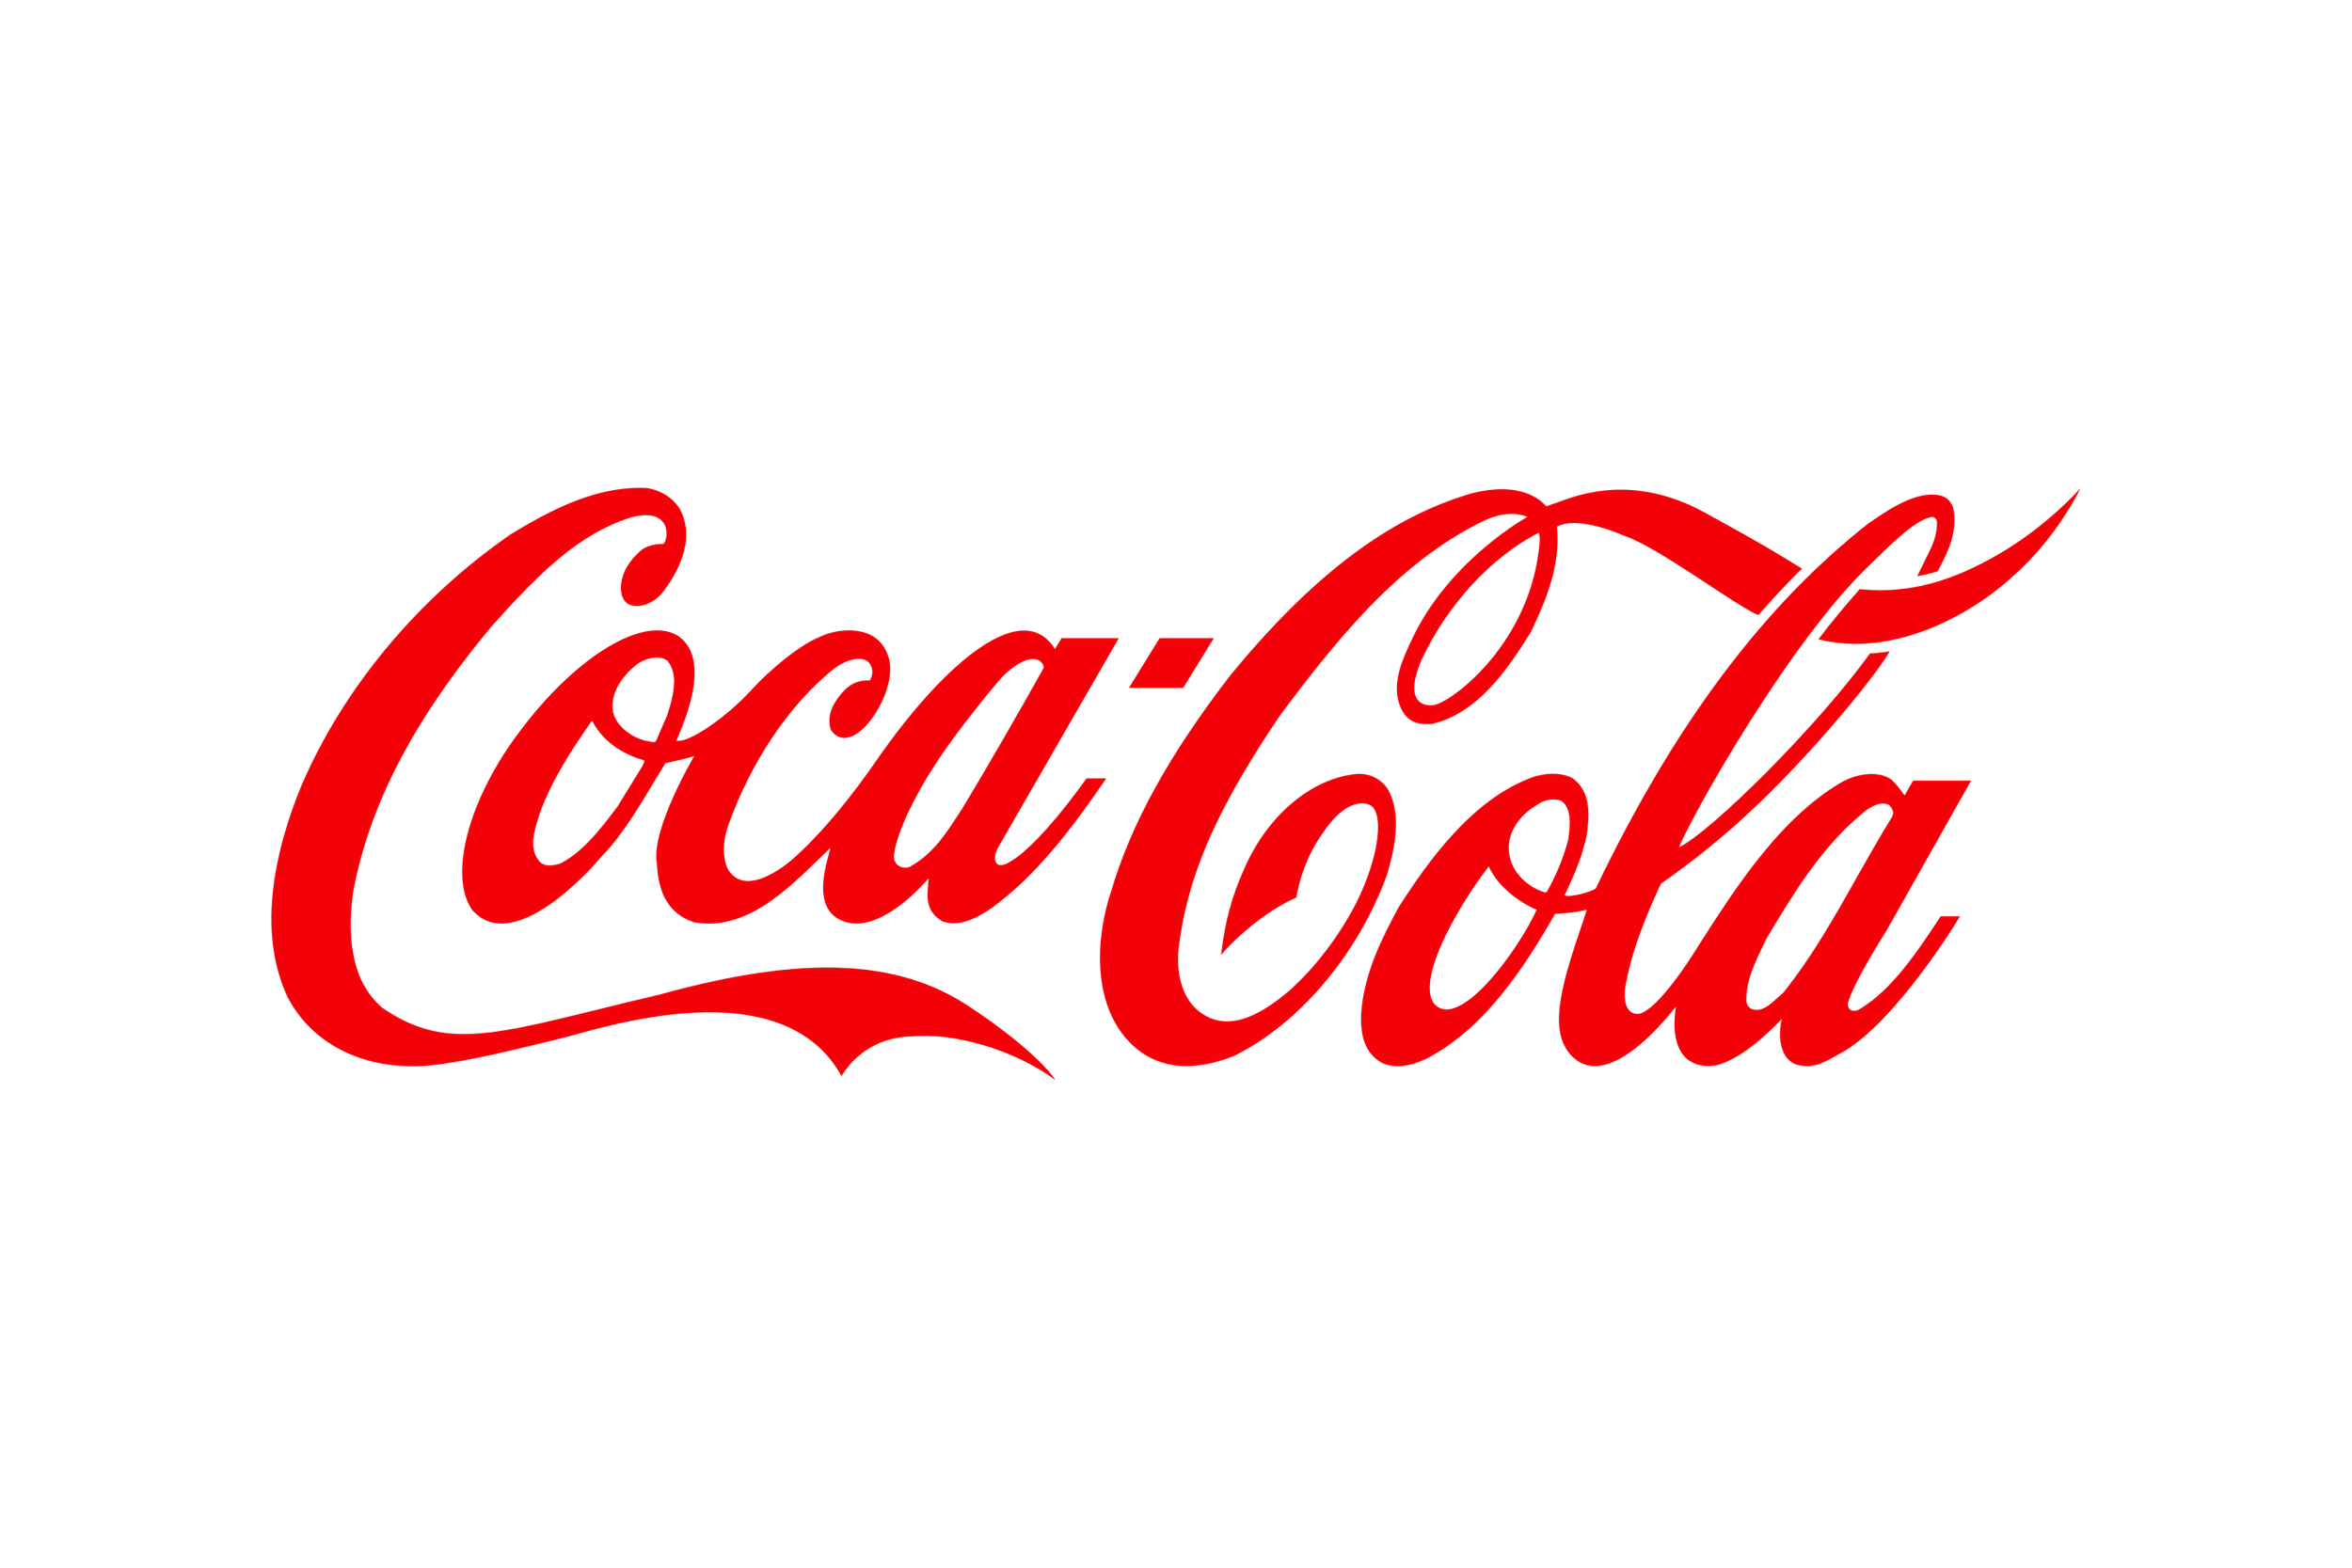 Coca-Cola-Logo.wine.png